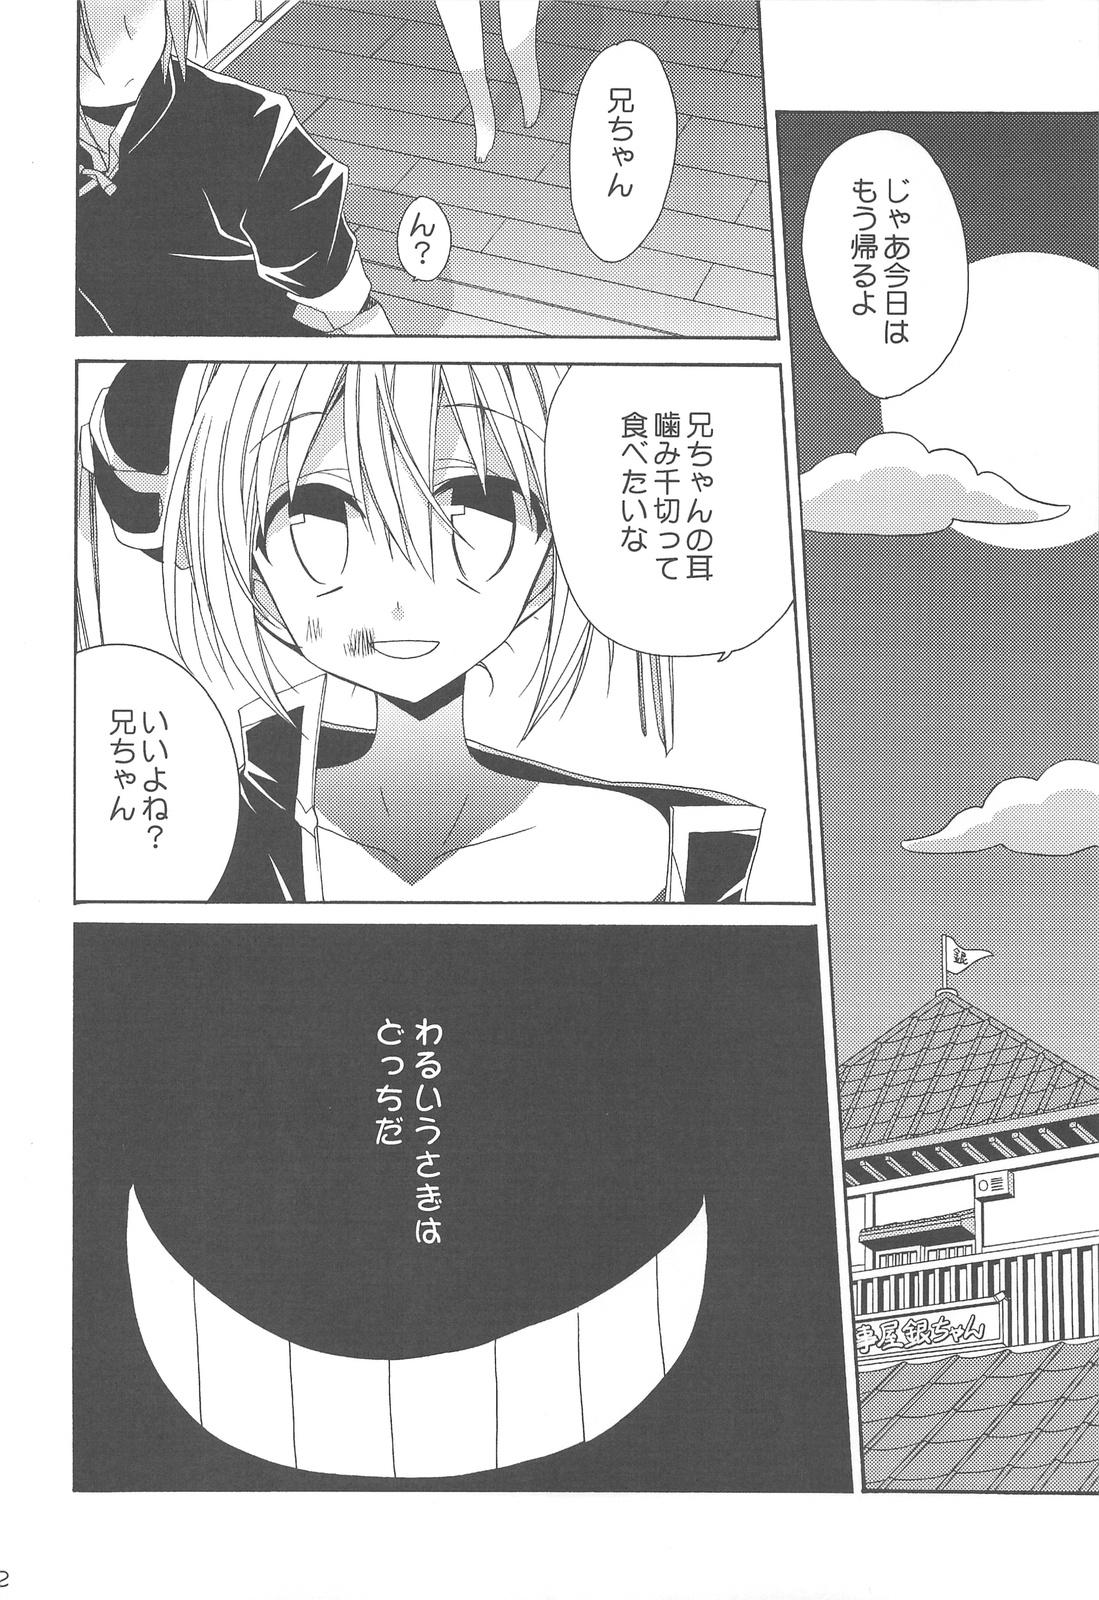 Nurse heroine syndrome - Gintama 18 Year Old - Page 11